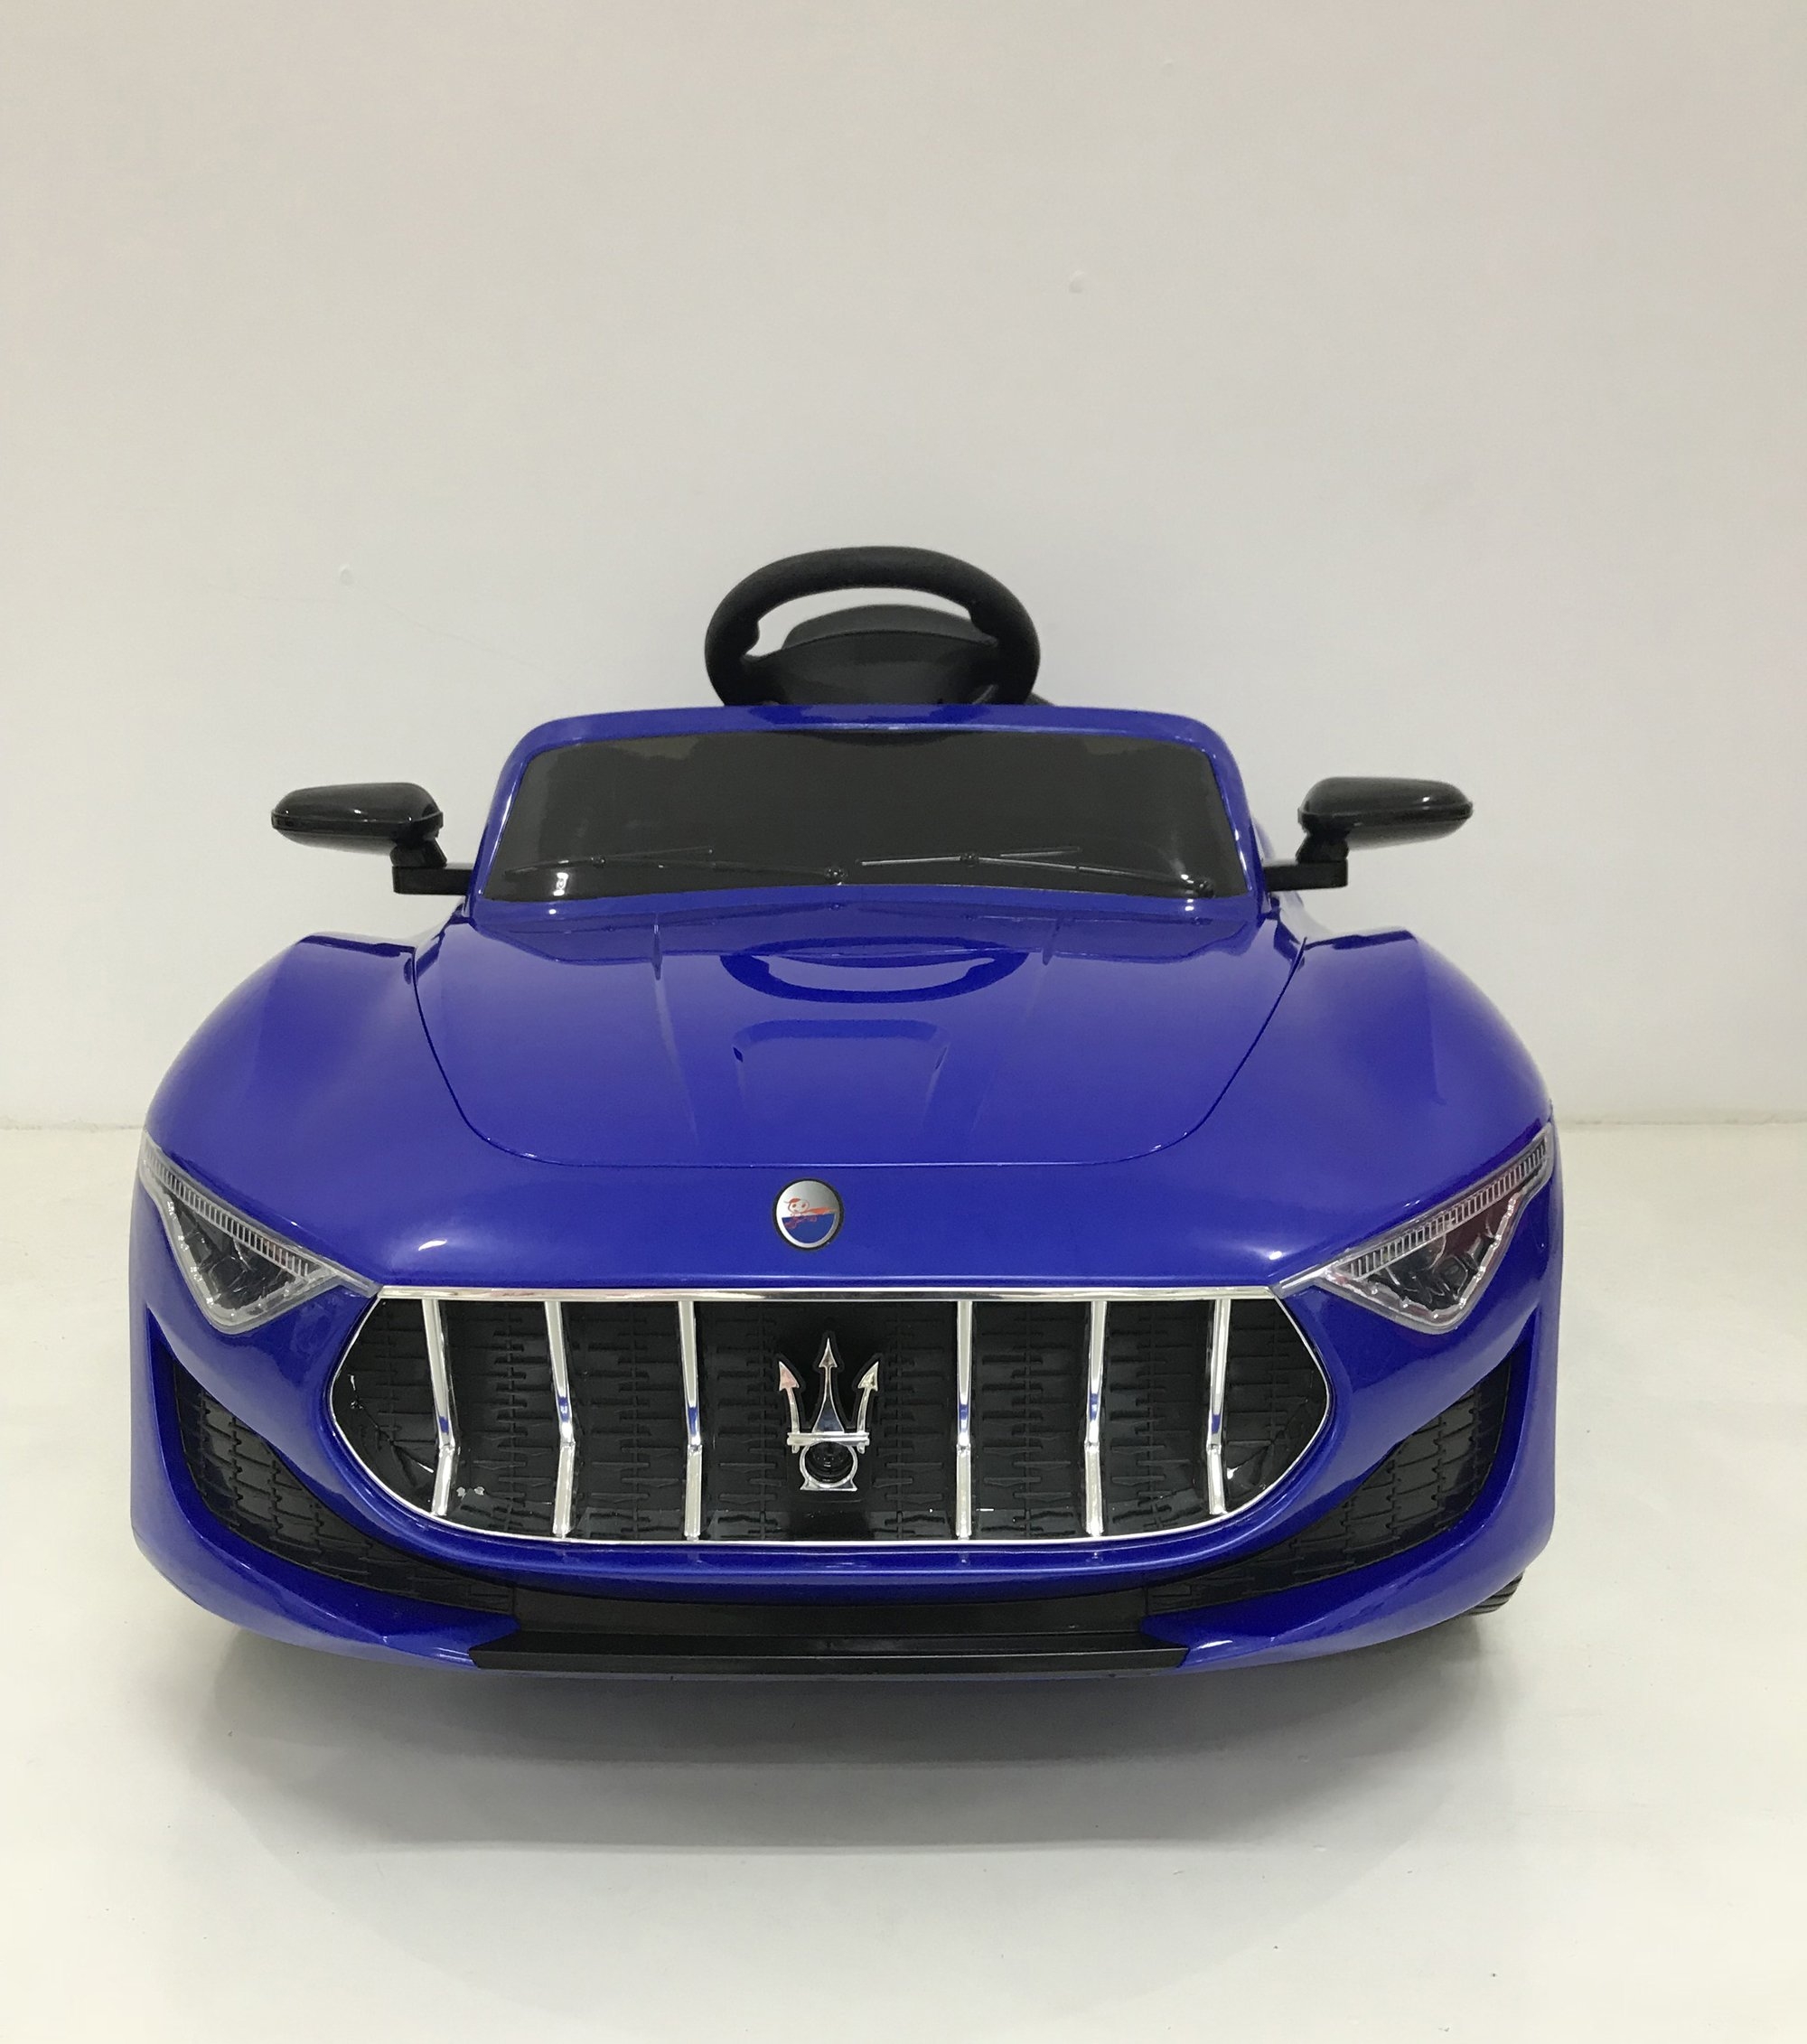 New Maserati Grandturismo Style 12V Electric Ride On Car – Blue